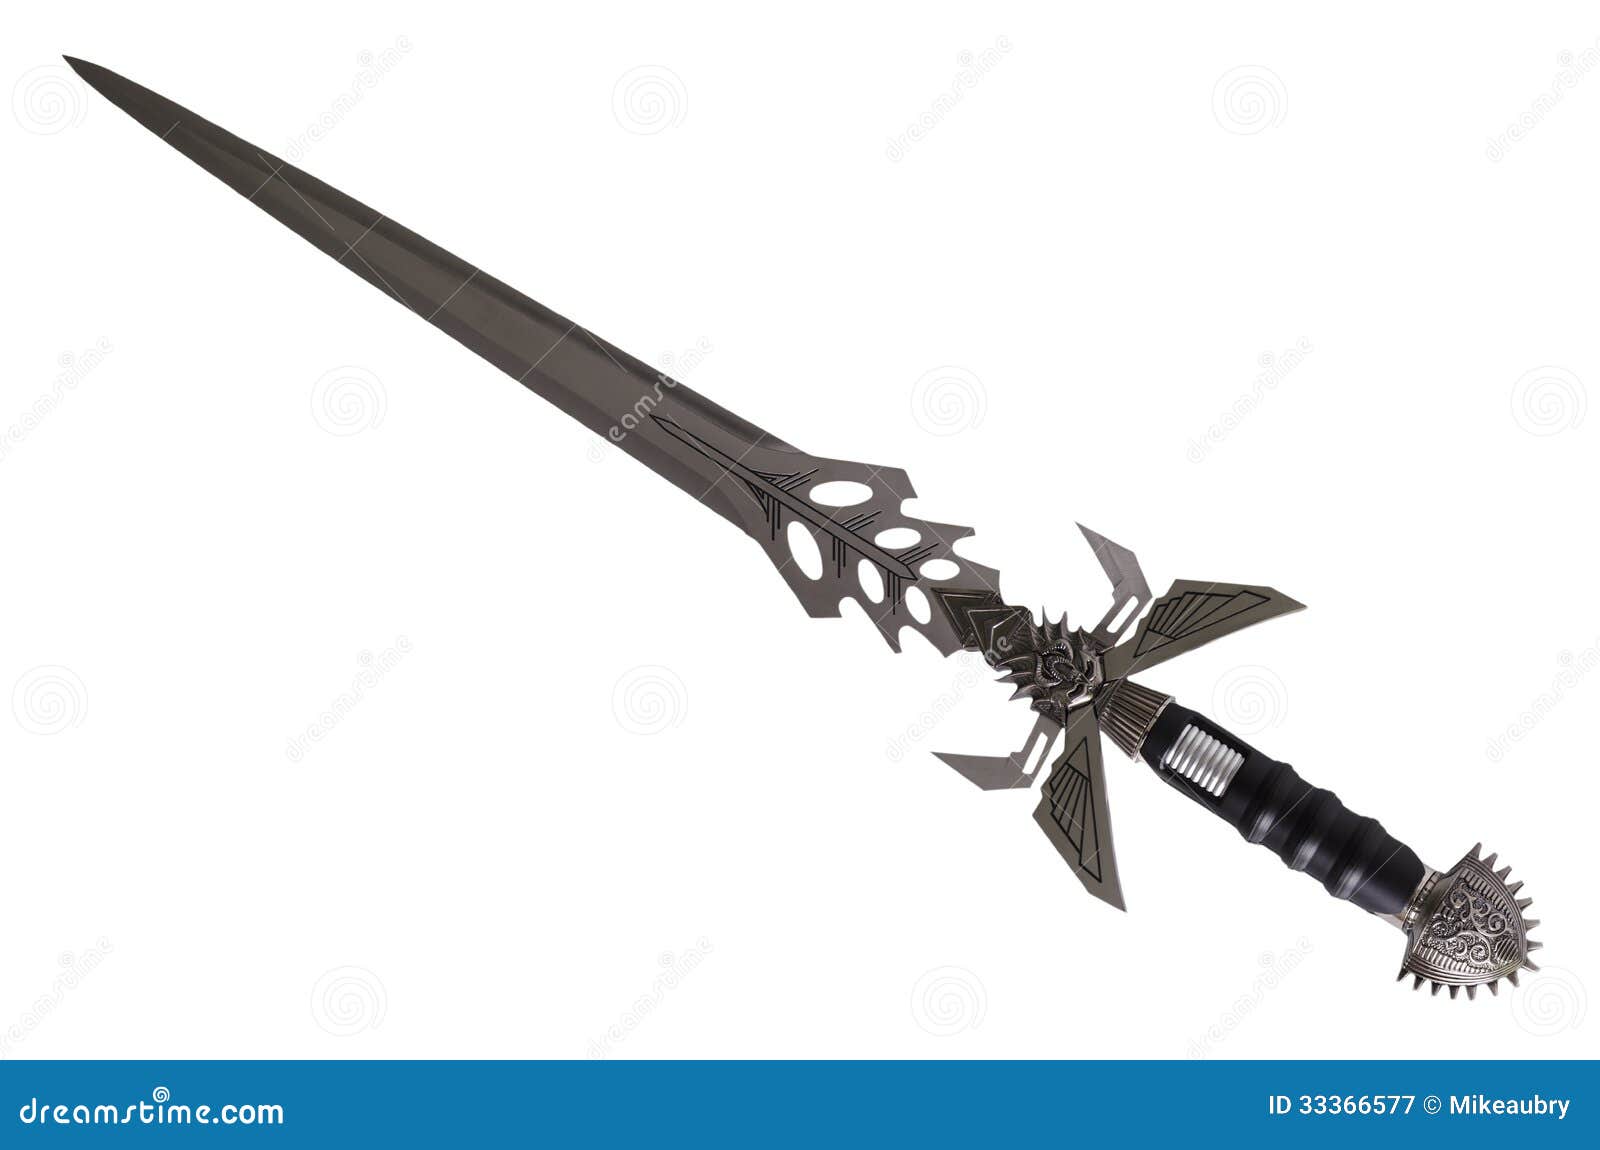 fantasy-sword-isolated-white-background-disposed-diagonal-33366577.jpg